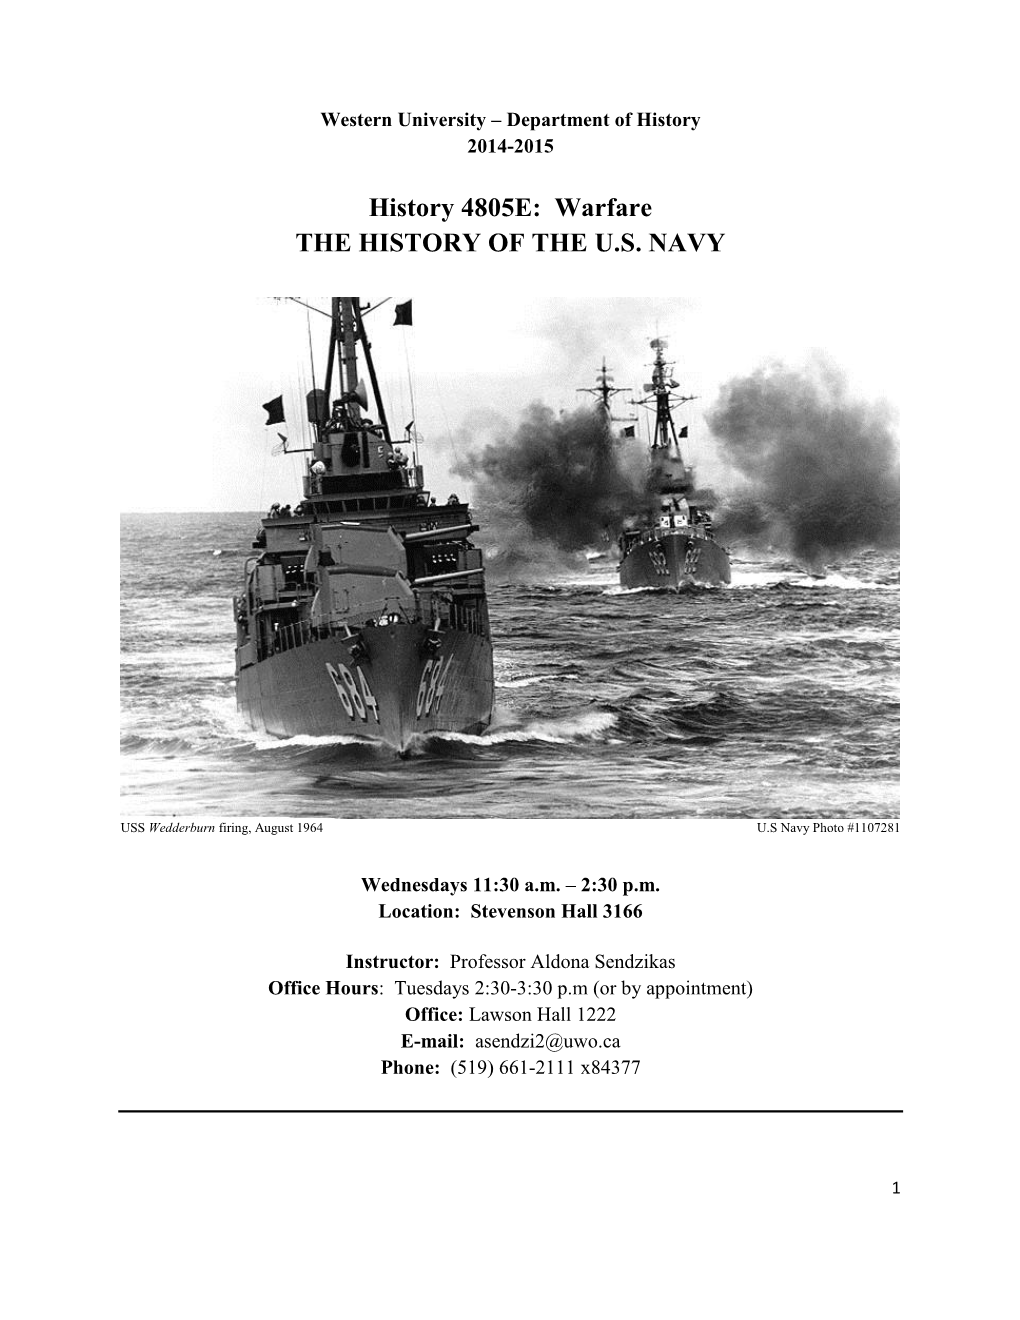 History 4805E: Warfare the HISTORY of the U.S